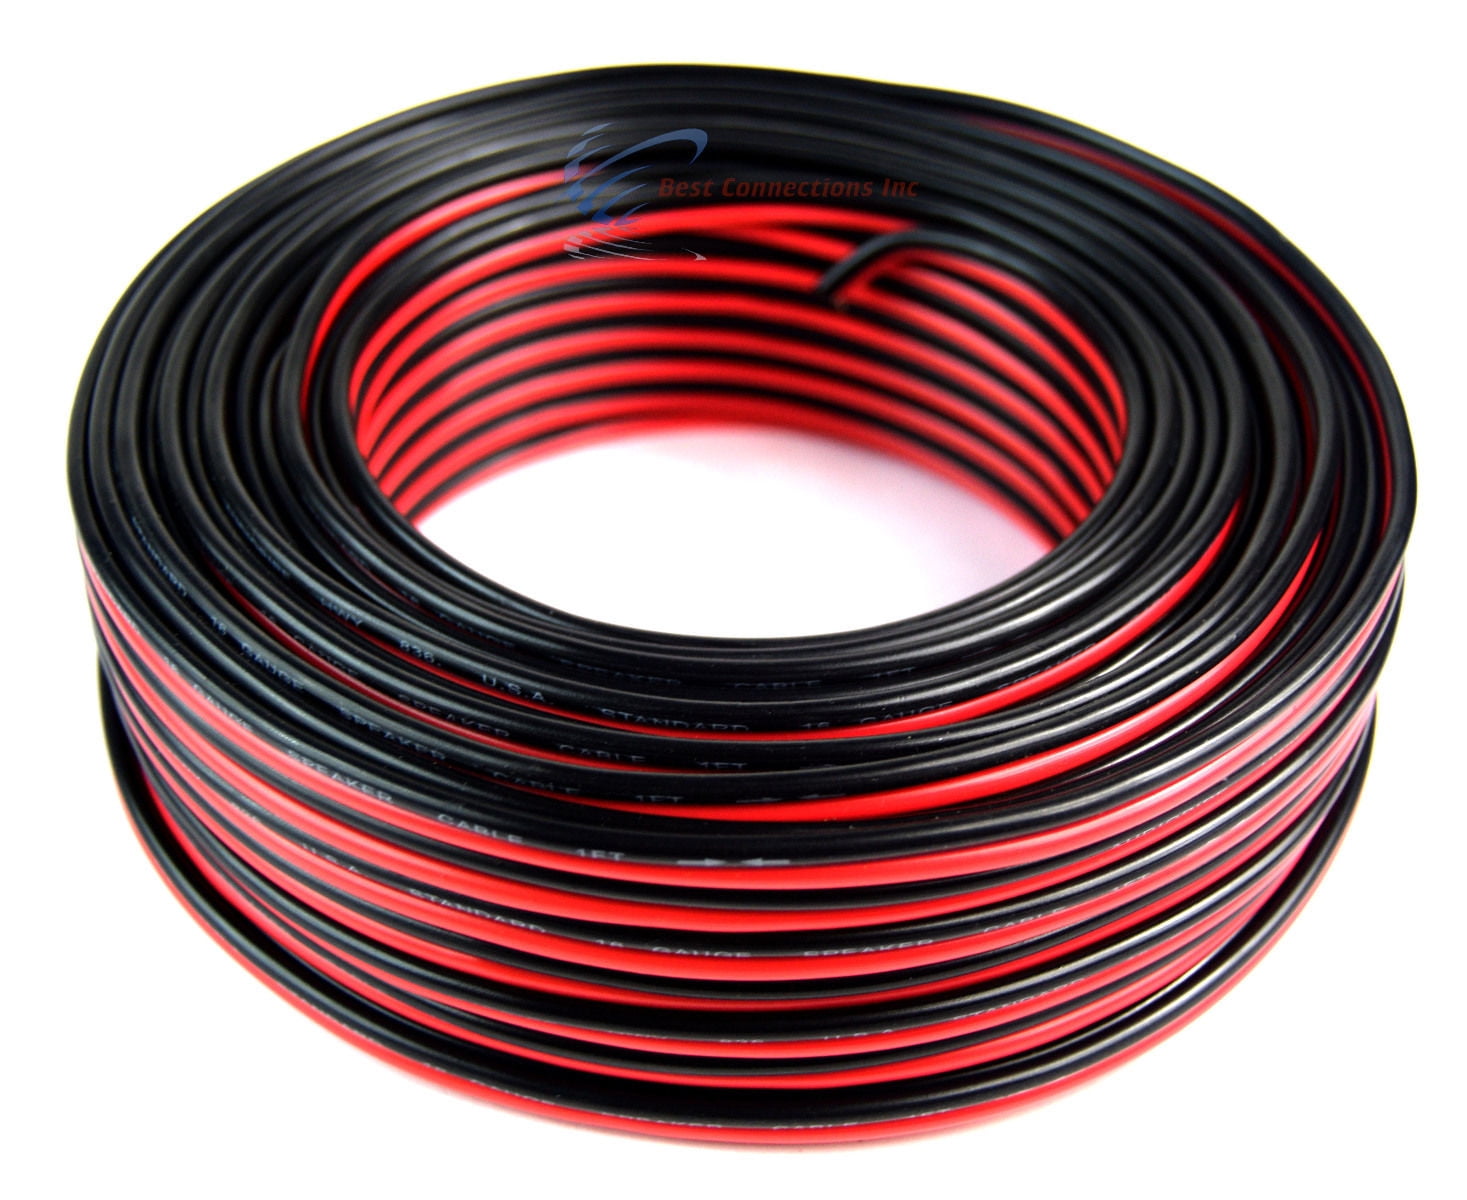 25' Feet 20 GA Gauge Red Black 2 Conductor Speaker Wire PREMIUM Quality 